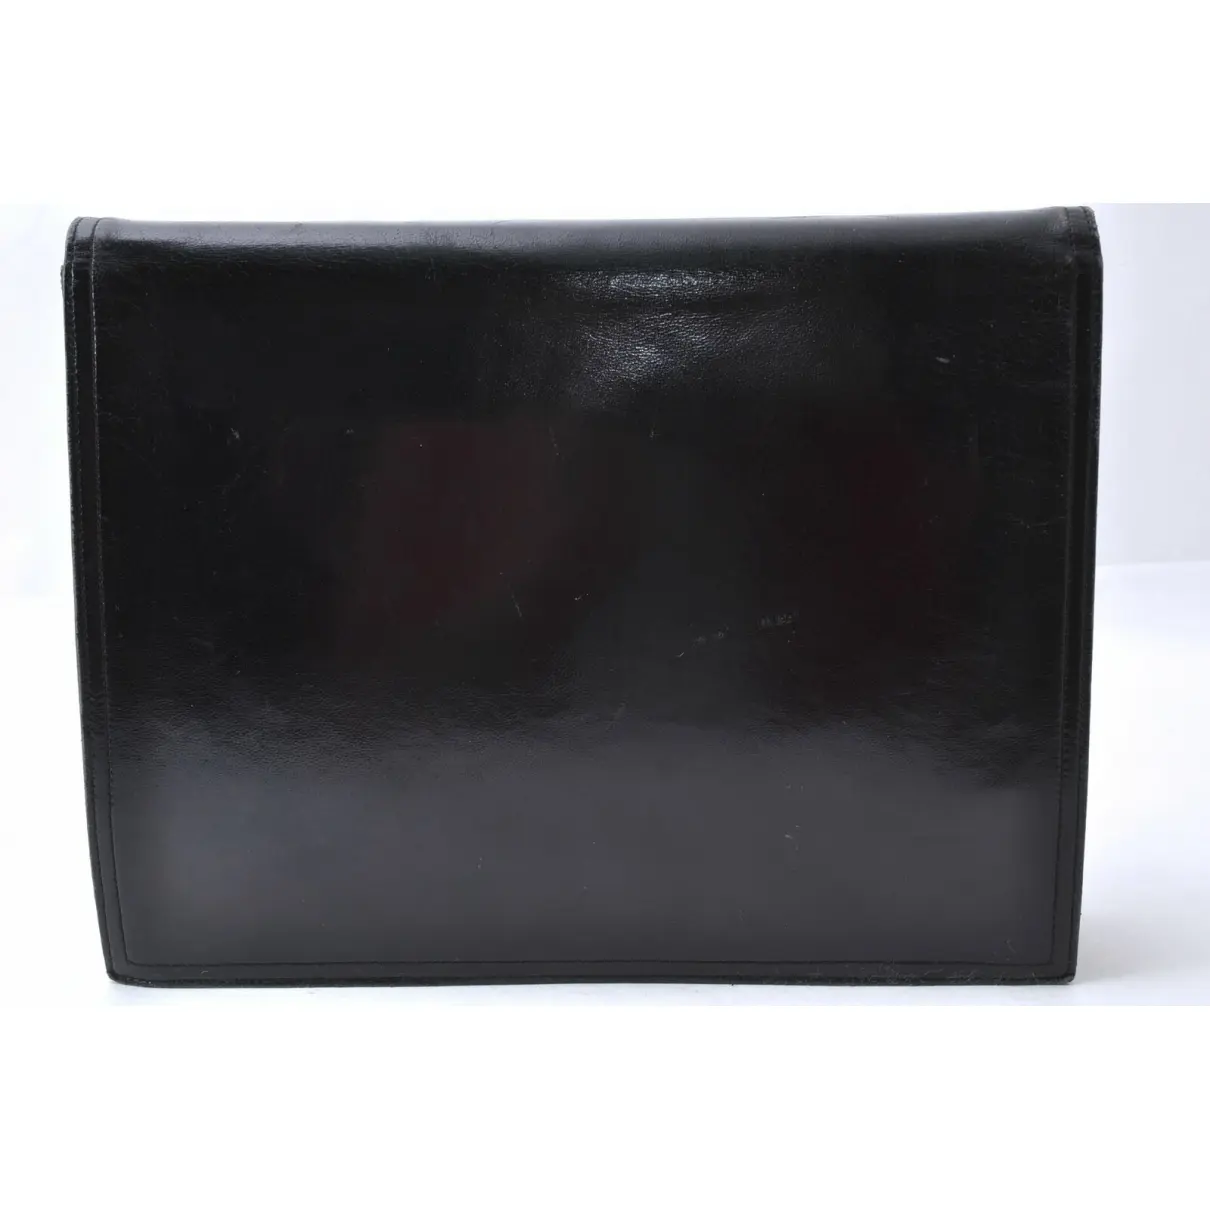 Buy Yves Saint Laurent Leather clutch bag online